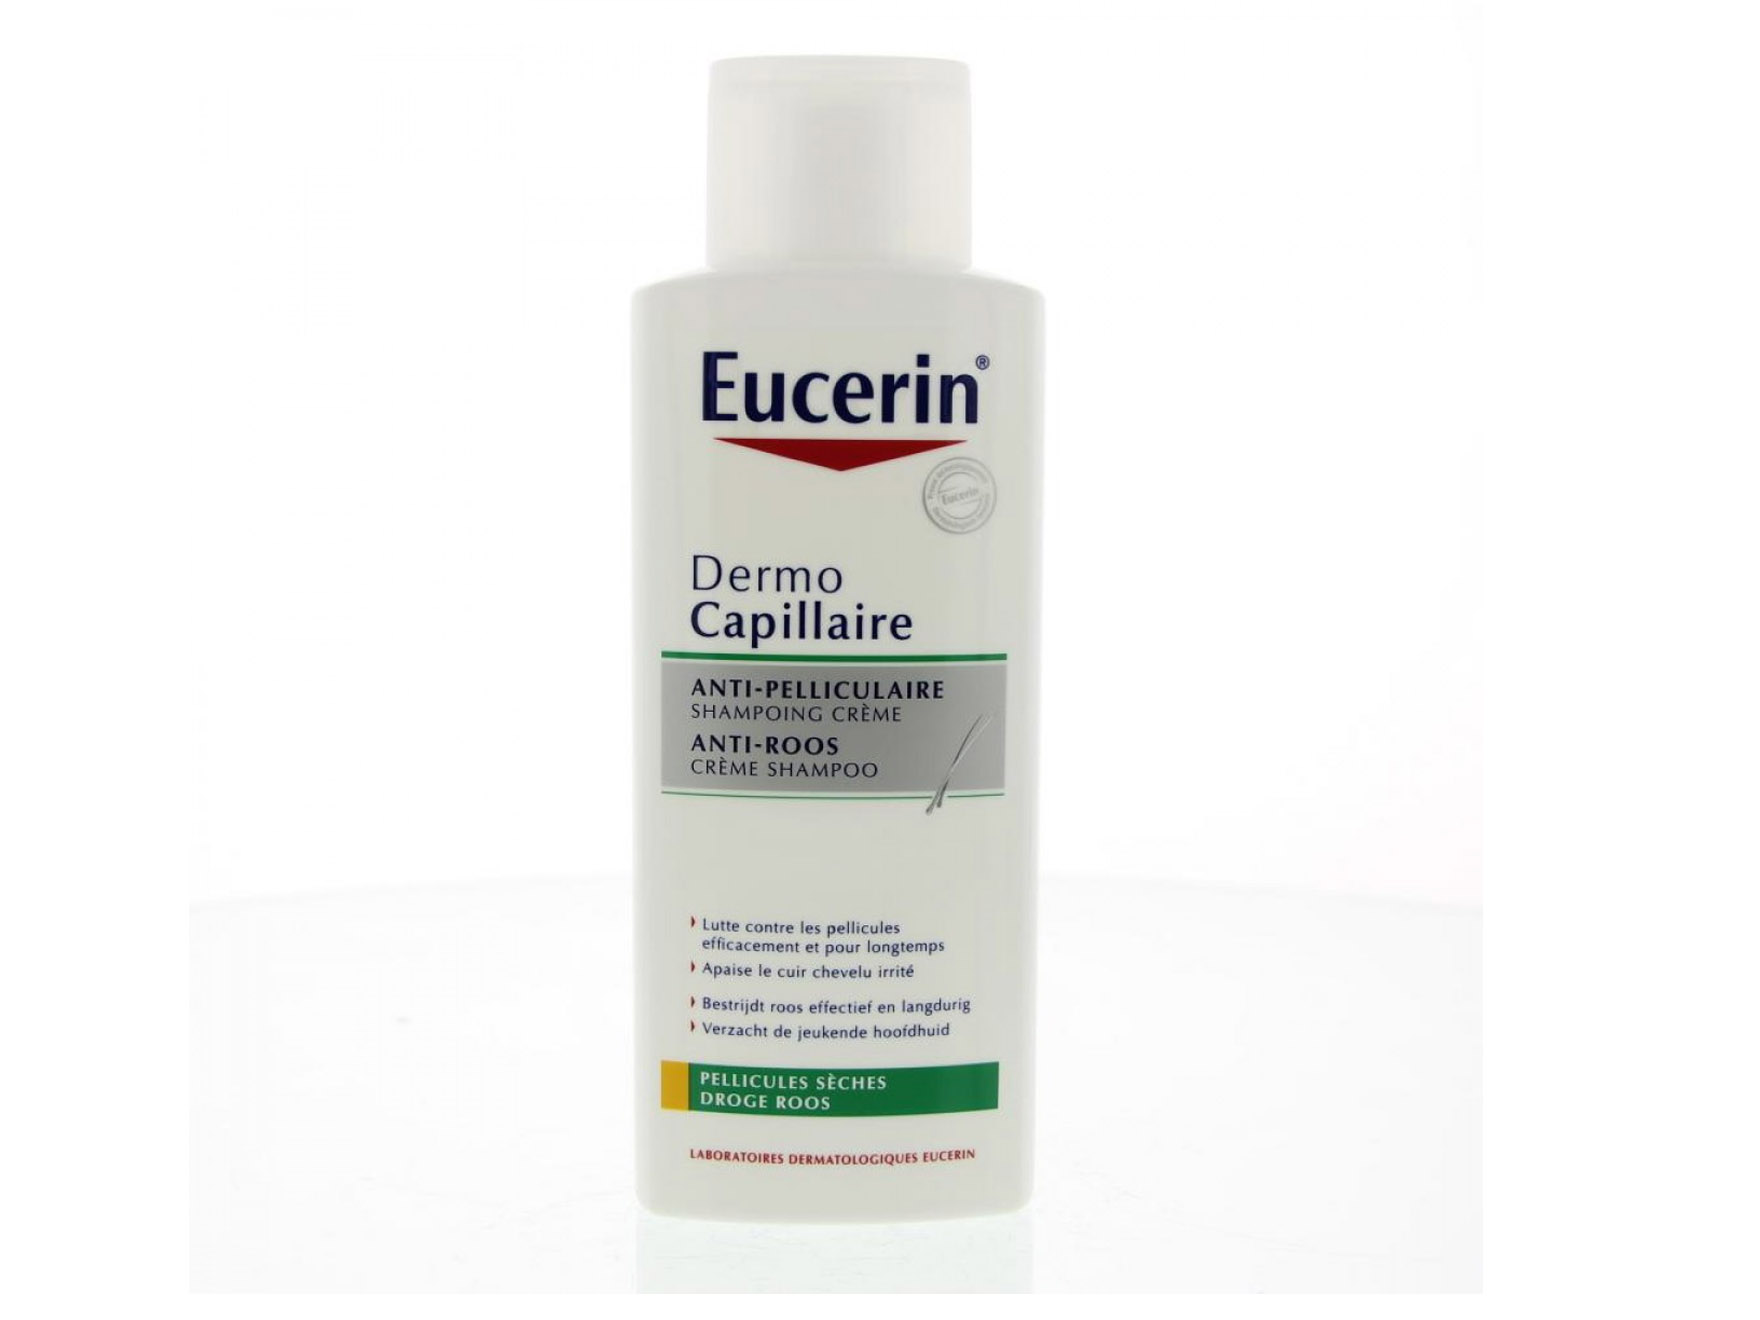 Eucerin shampooing crème anti-pélliculaire - 250 ml - 1 pc